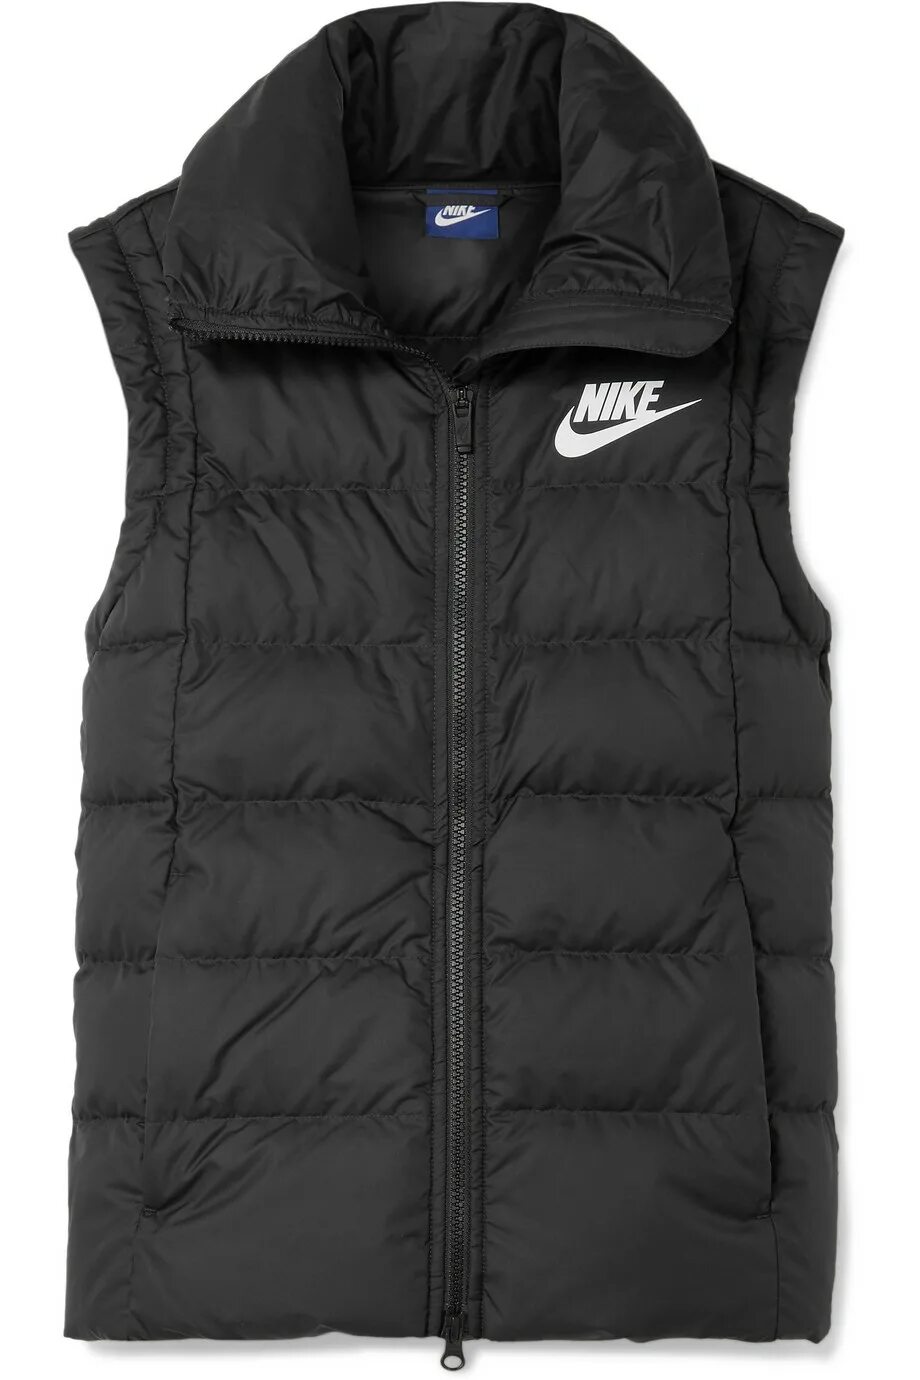 Жилет мужской Nike Basic down Vest 419009-238. Nike / жилет Allure down Vest. Жилетка Nike Nocta. Жилет Nike Synthetic fill. Найк жилет